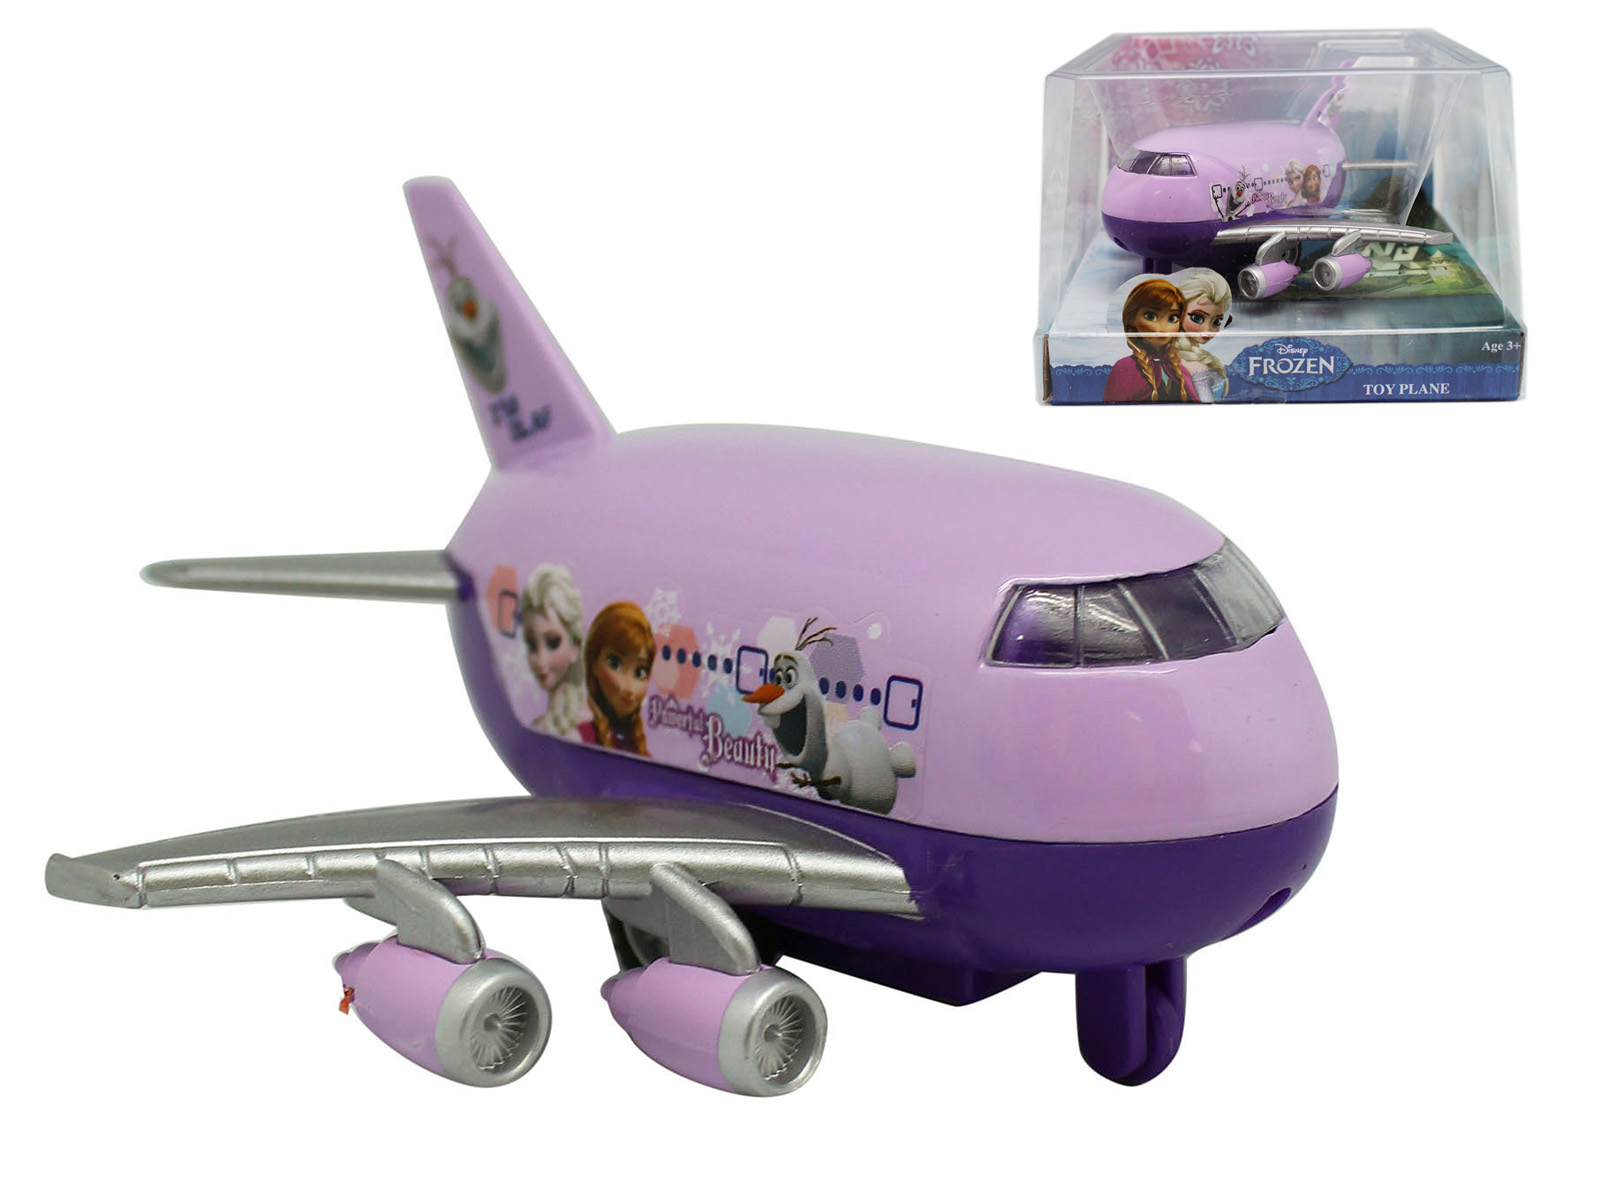 purple airplane toy